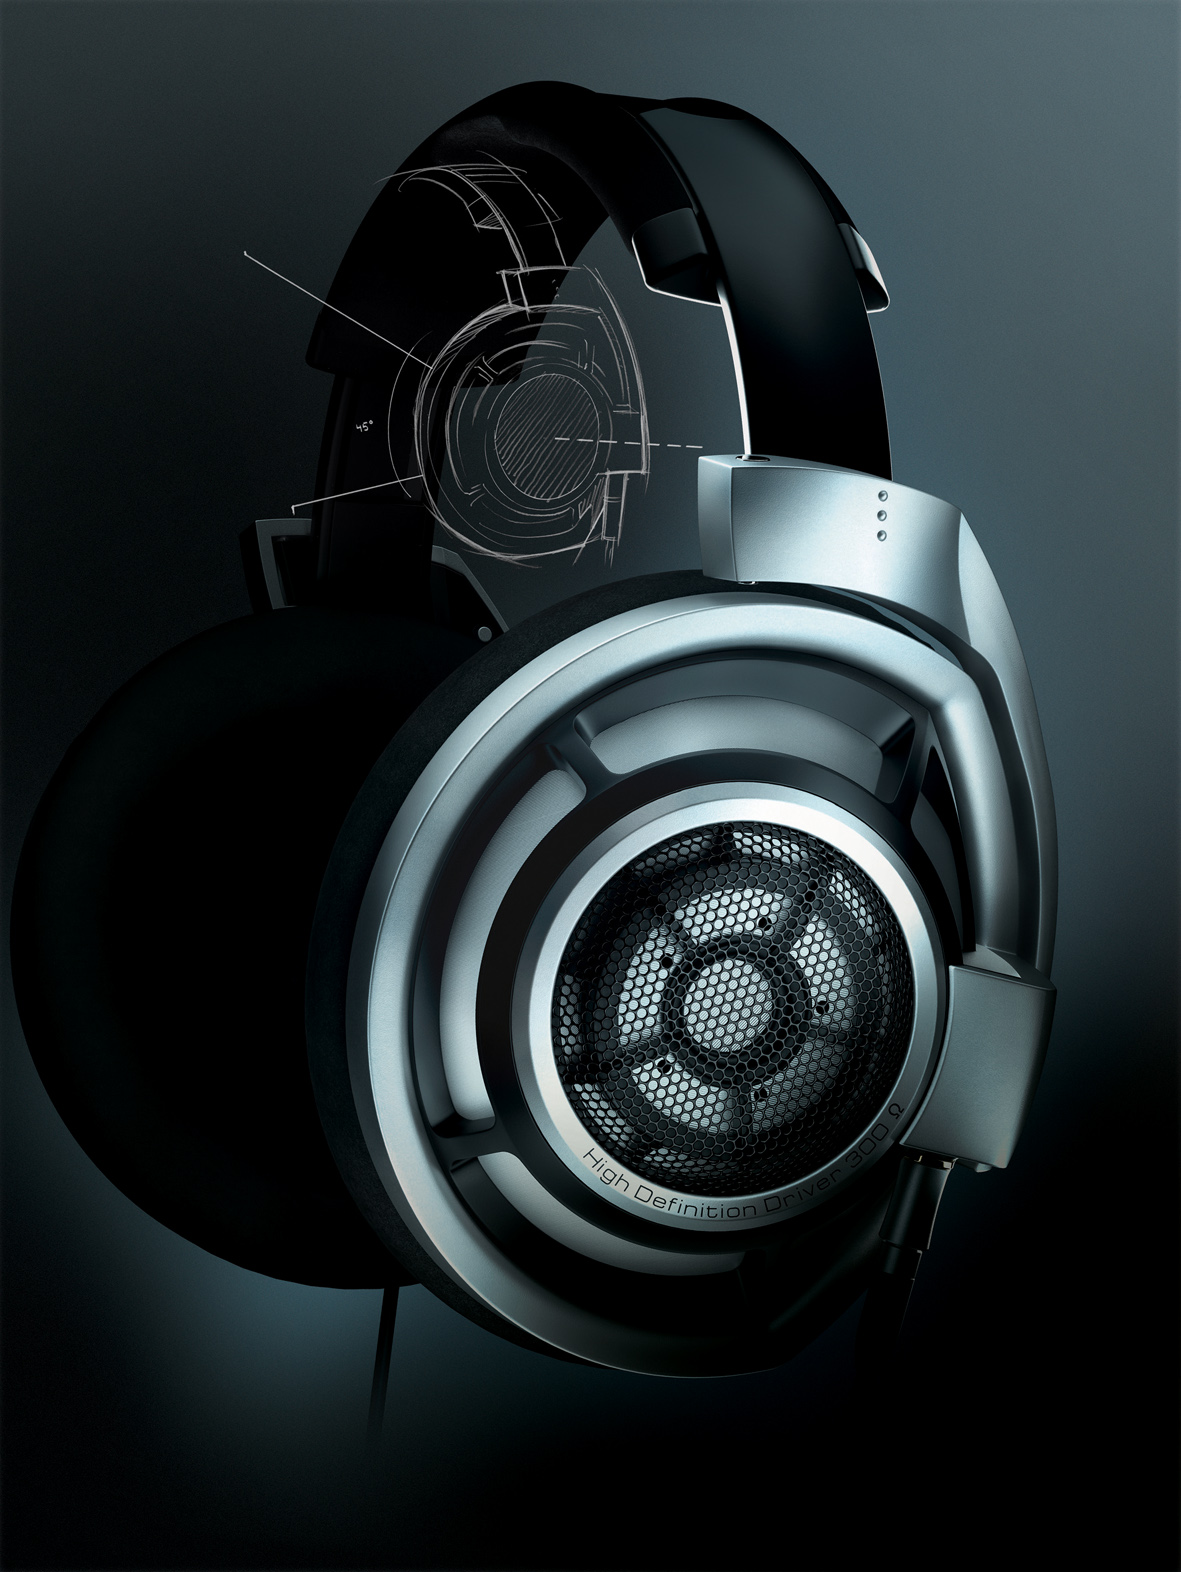 Diferentes conceptos en amplificación y auriculares. Sennheiser+HD800+Innovation+Awards+CES+2010